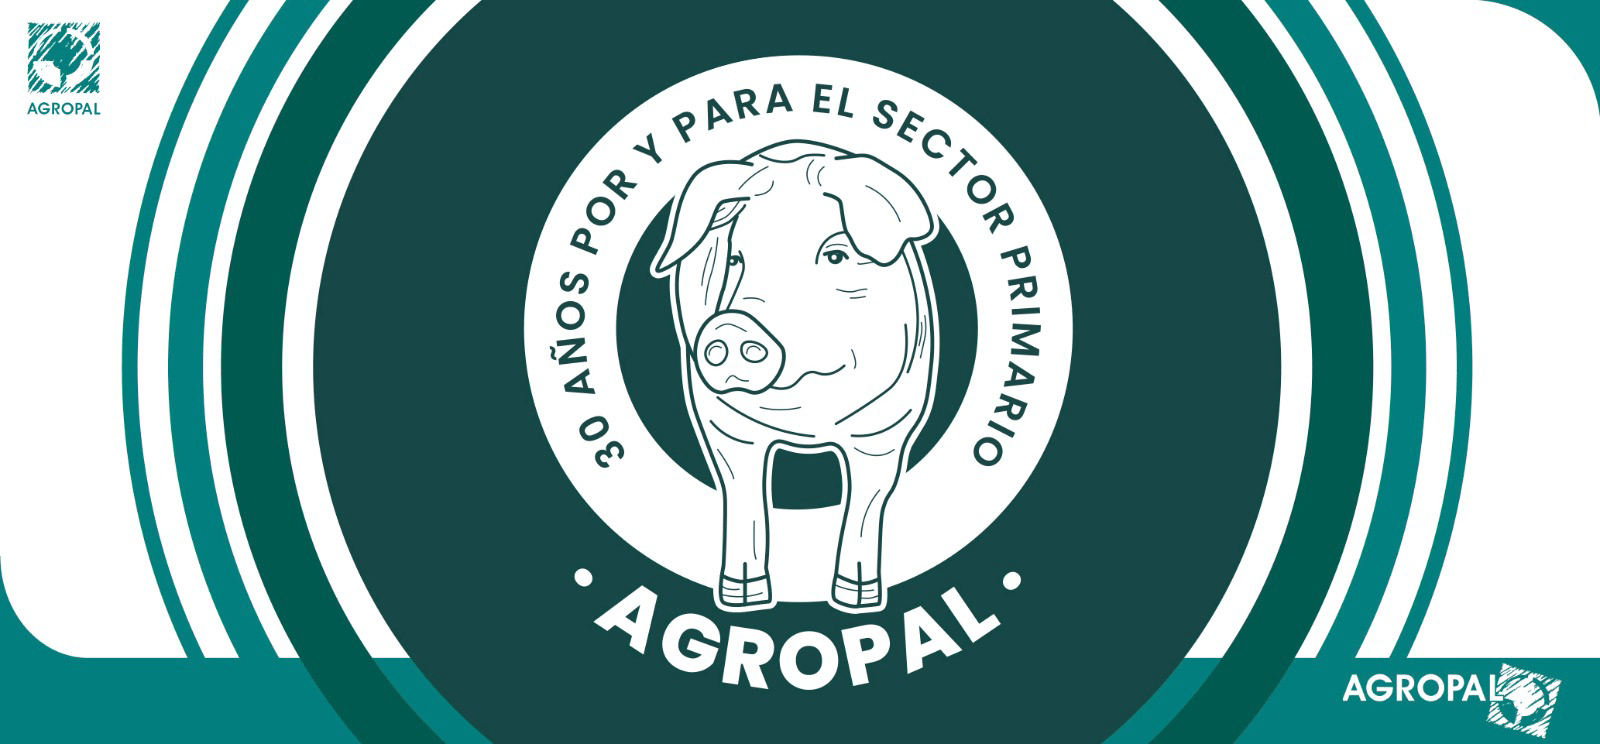 Agropal celebra su 30 aniversario